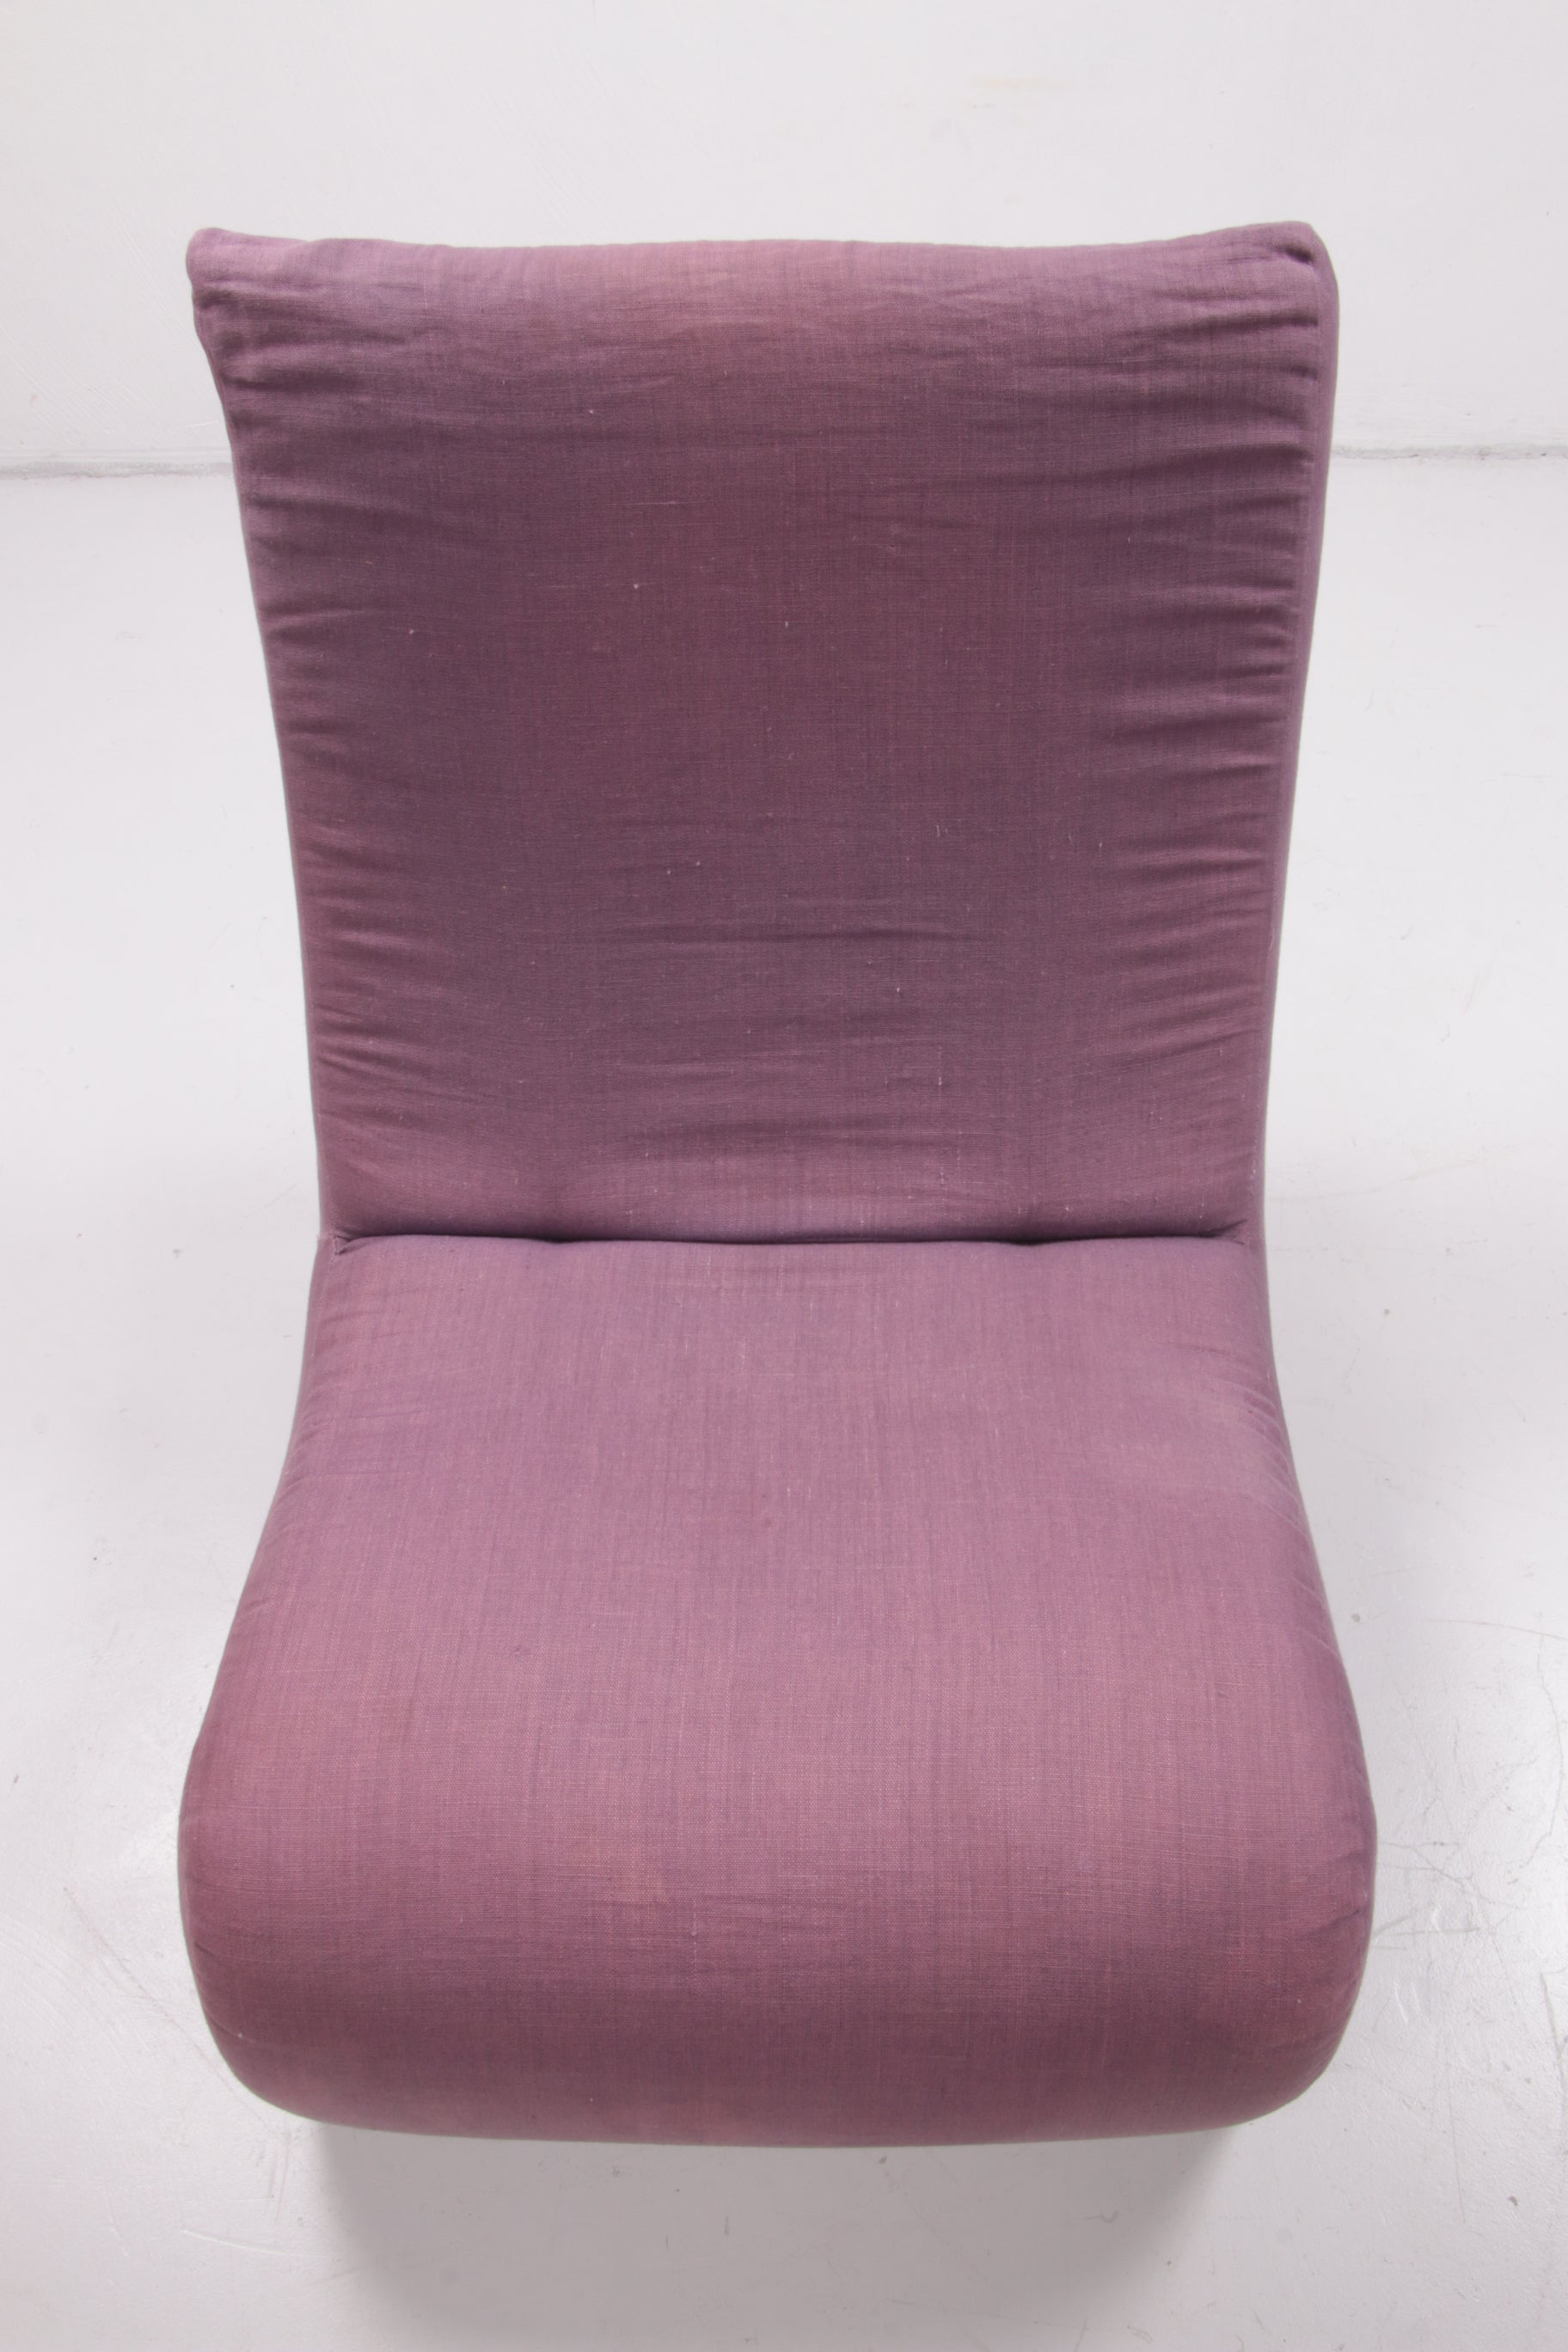 Vintage Relax fauteuil ontwerp van Verner Panton Model Amoebe,1970